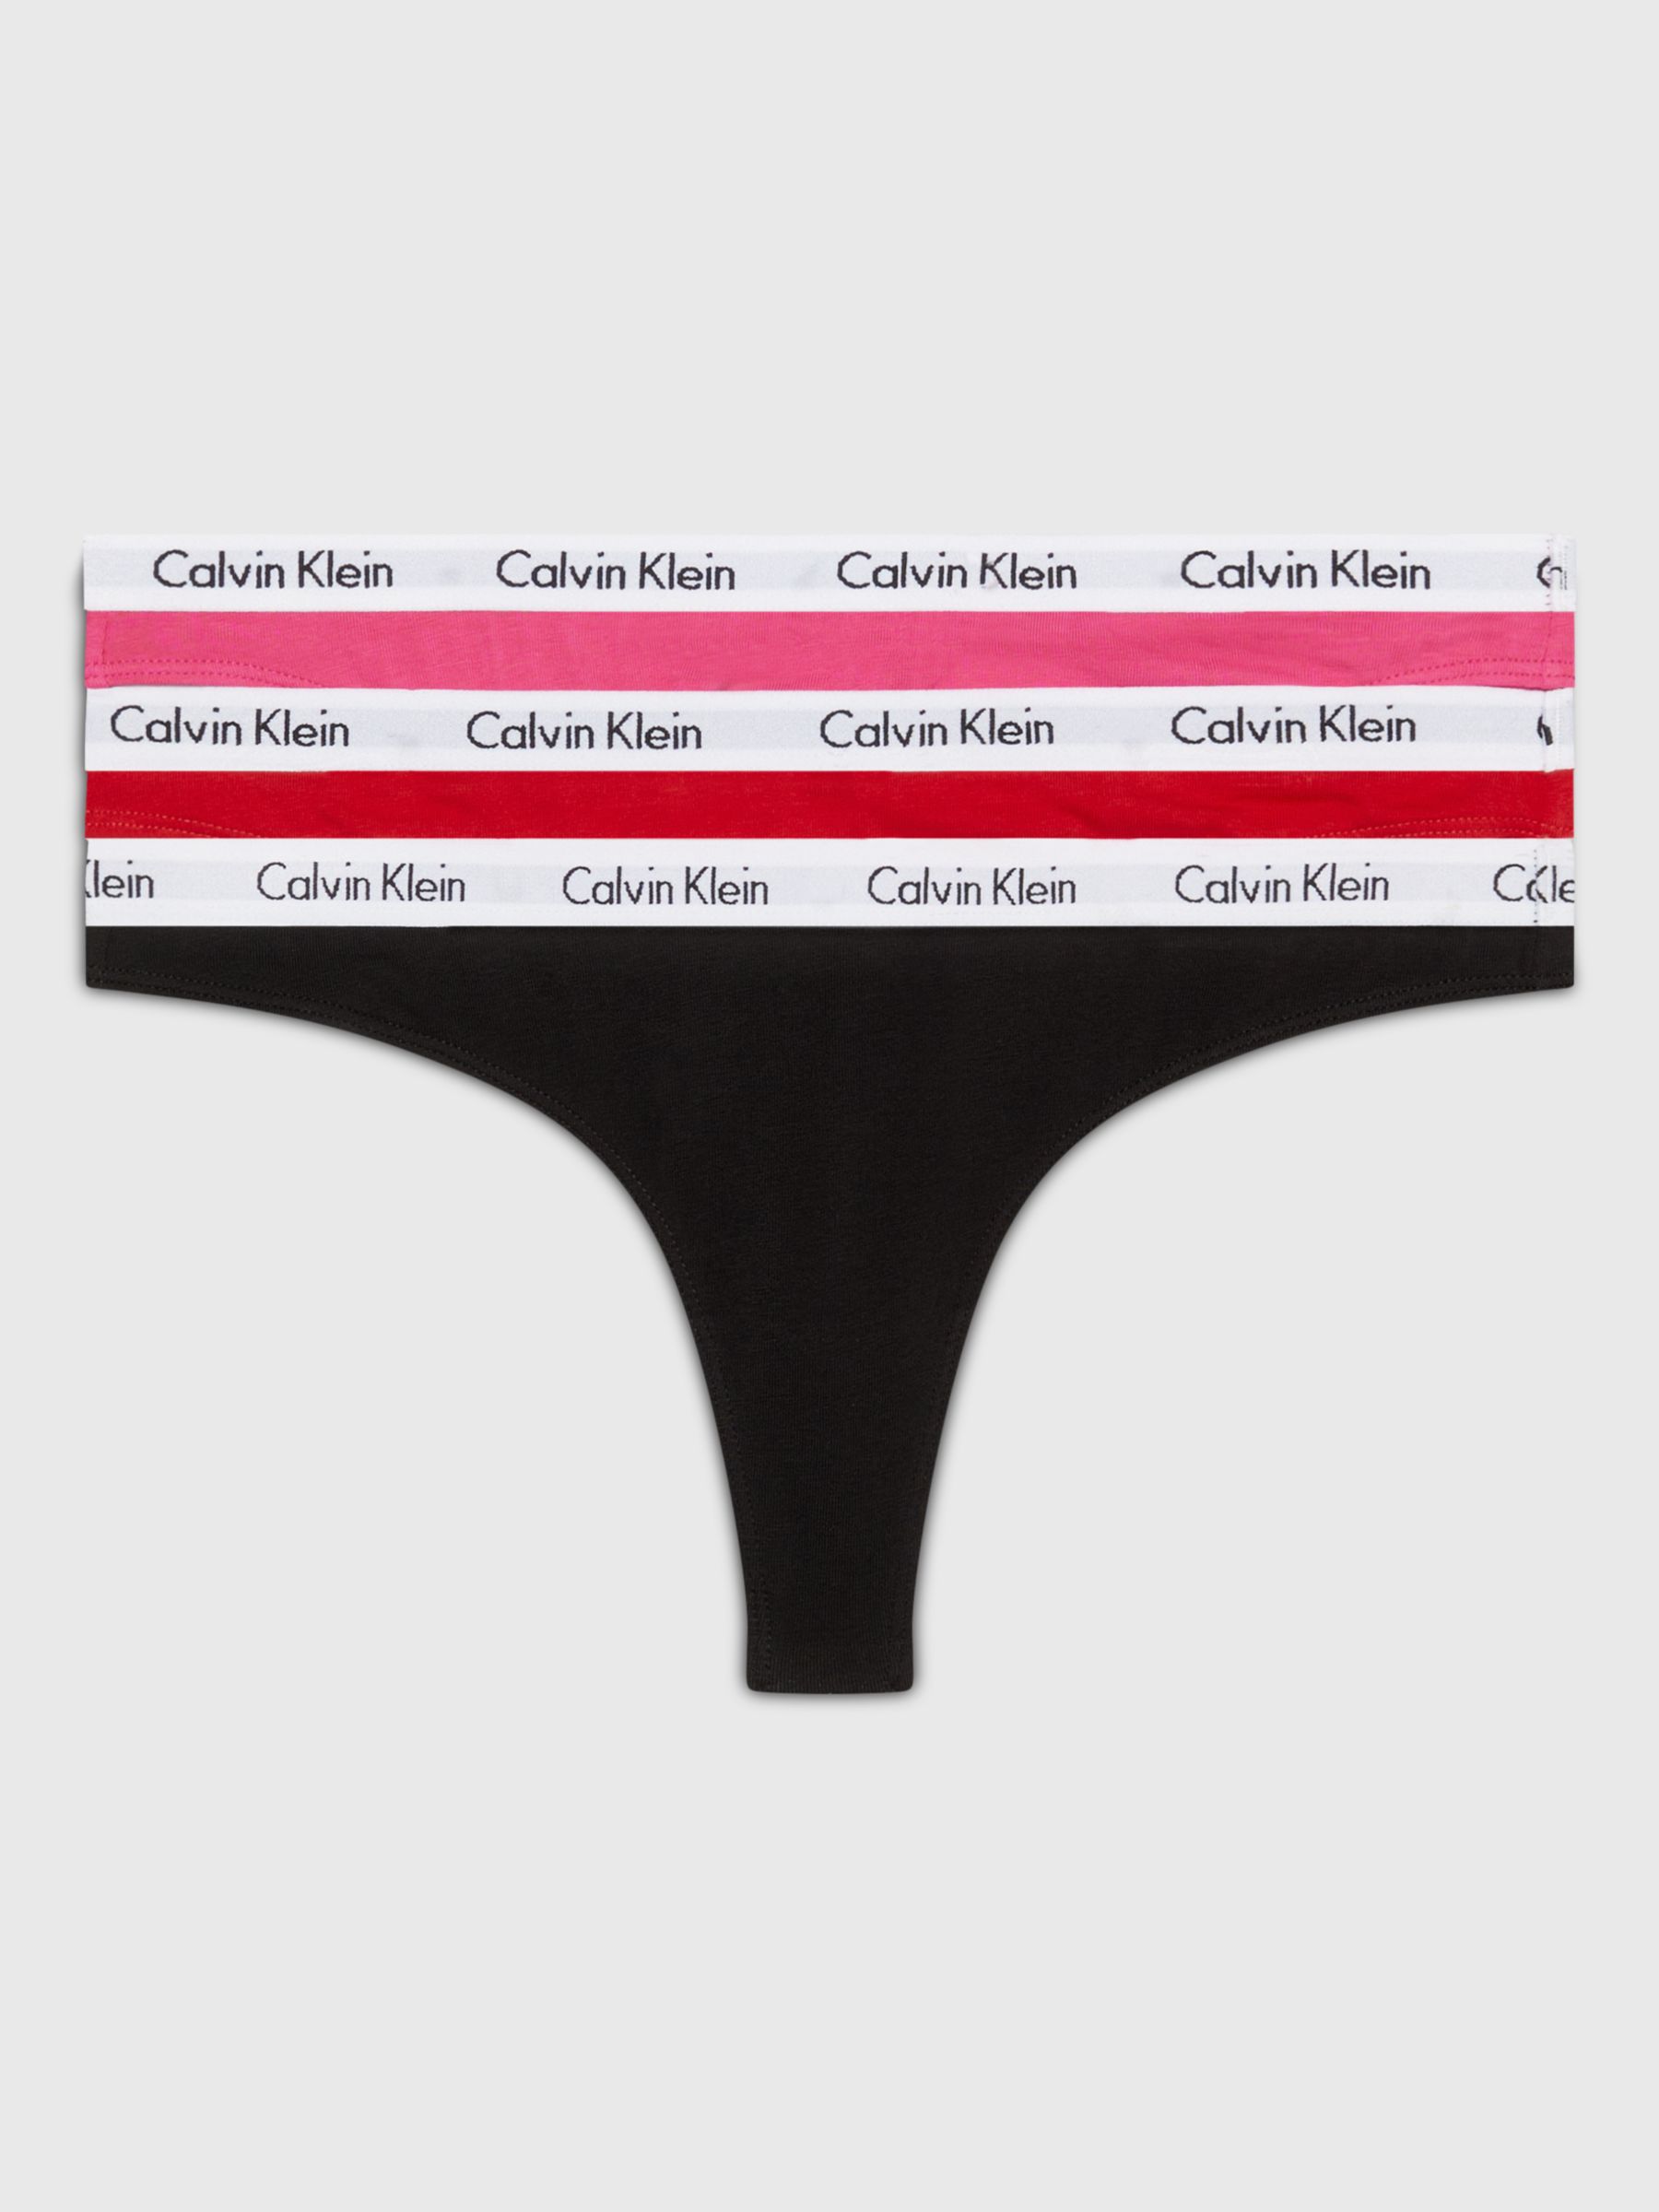 Calvin Klein Carousel Thong, Pack of 3, Black/Rouge/Fuchsia at